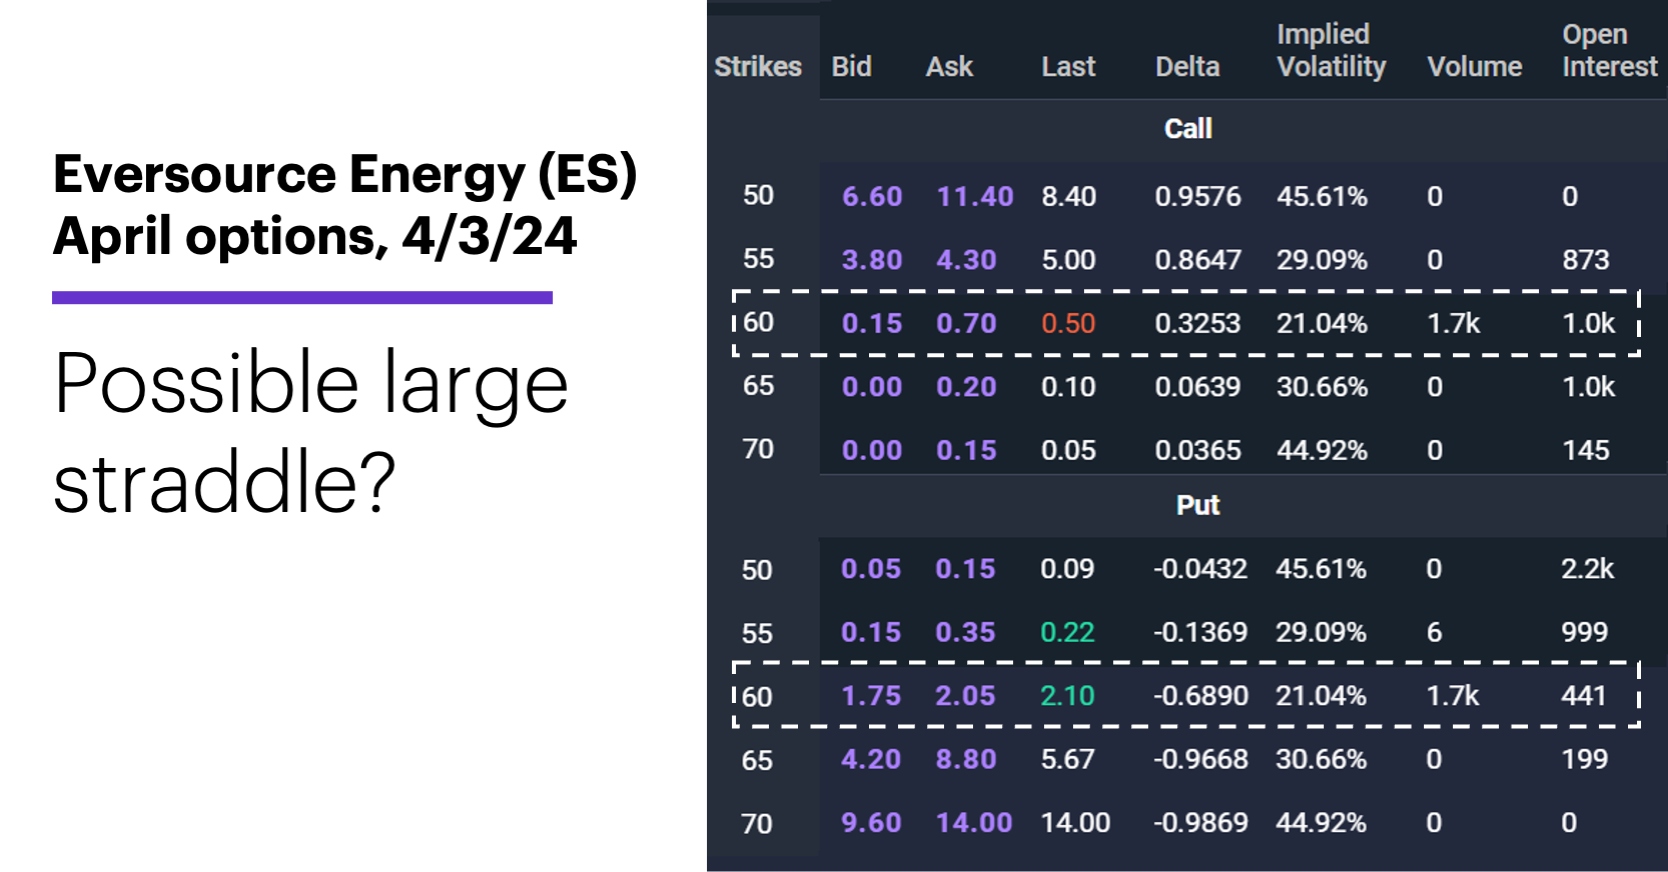 Chart 1: Eversource Energy (ES) April options, 4/3/24. Eversource Energy (ES) options chain. Possible large straddle?